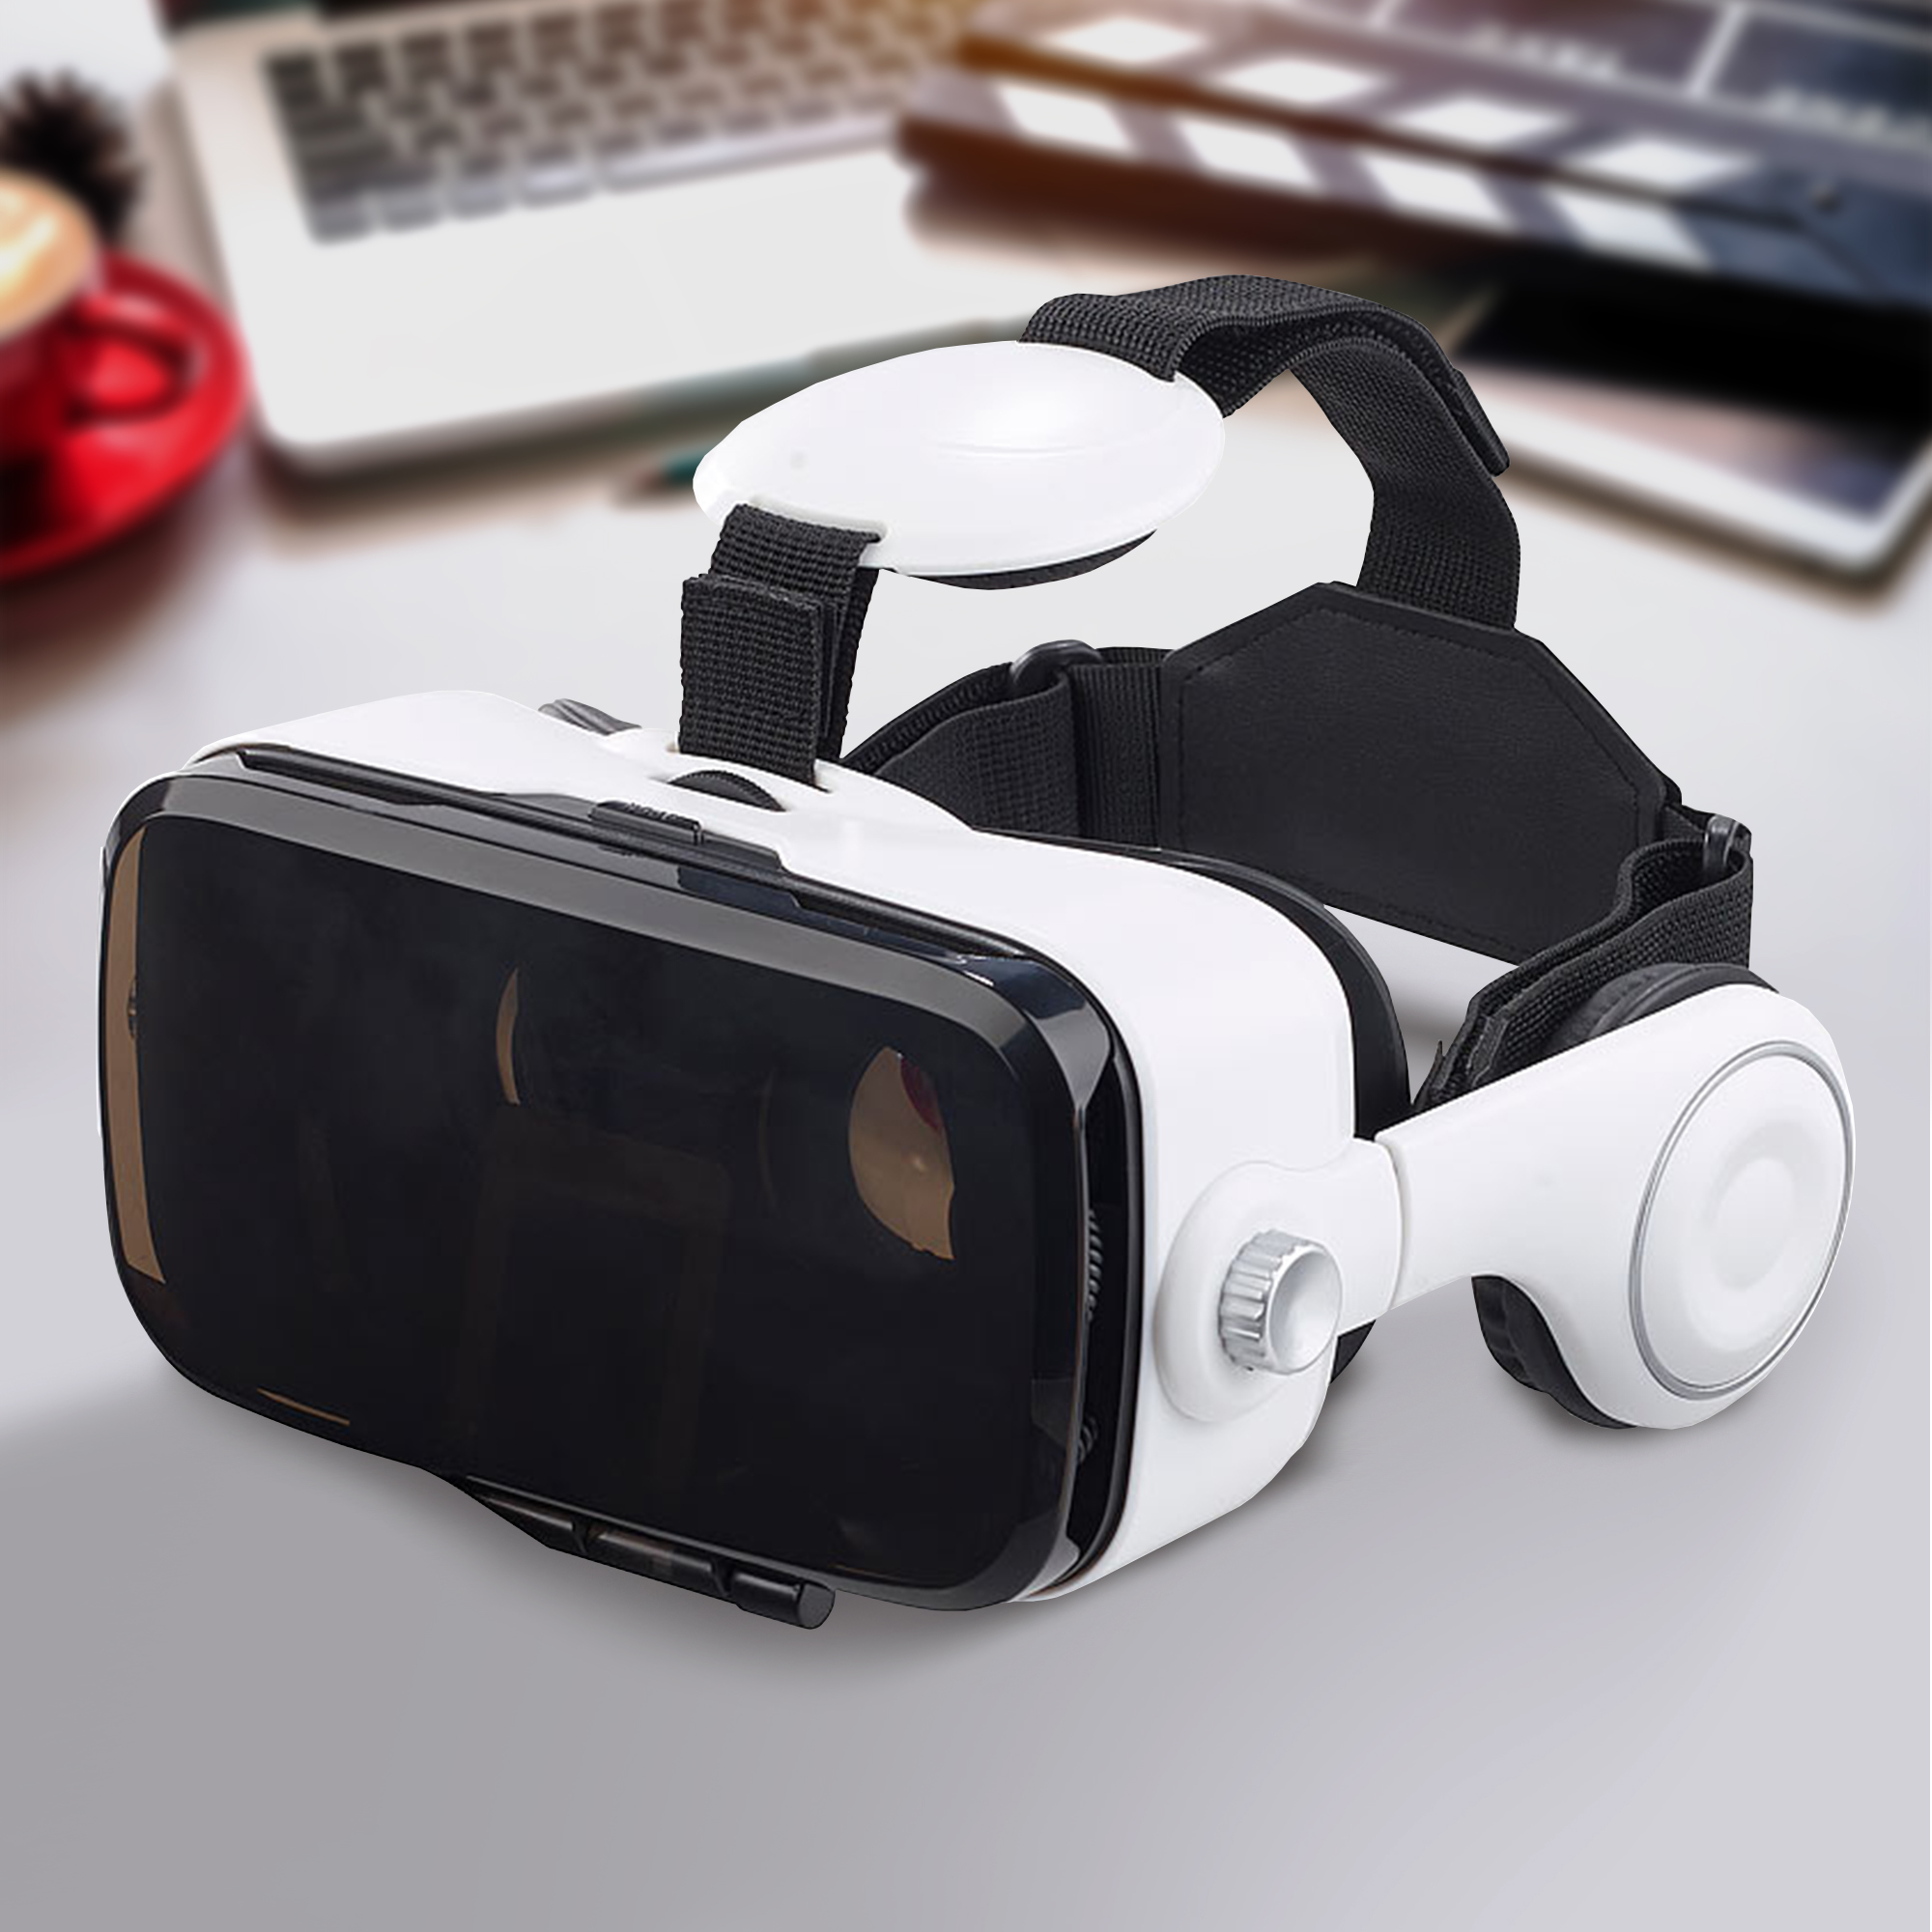 Virtual Reality Brille für Smartphones 3132 - 7